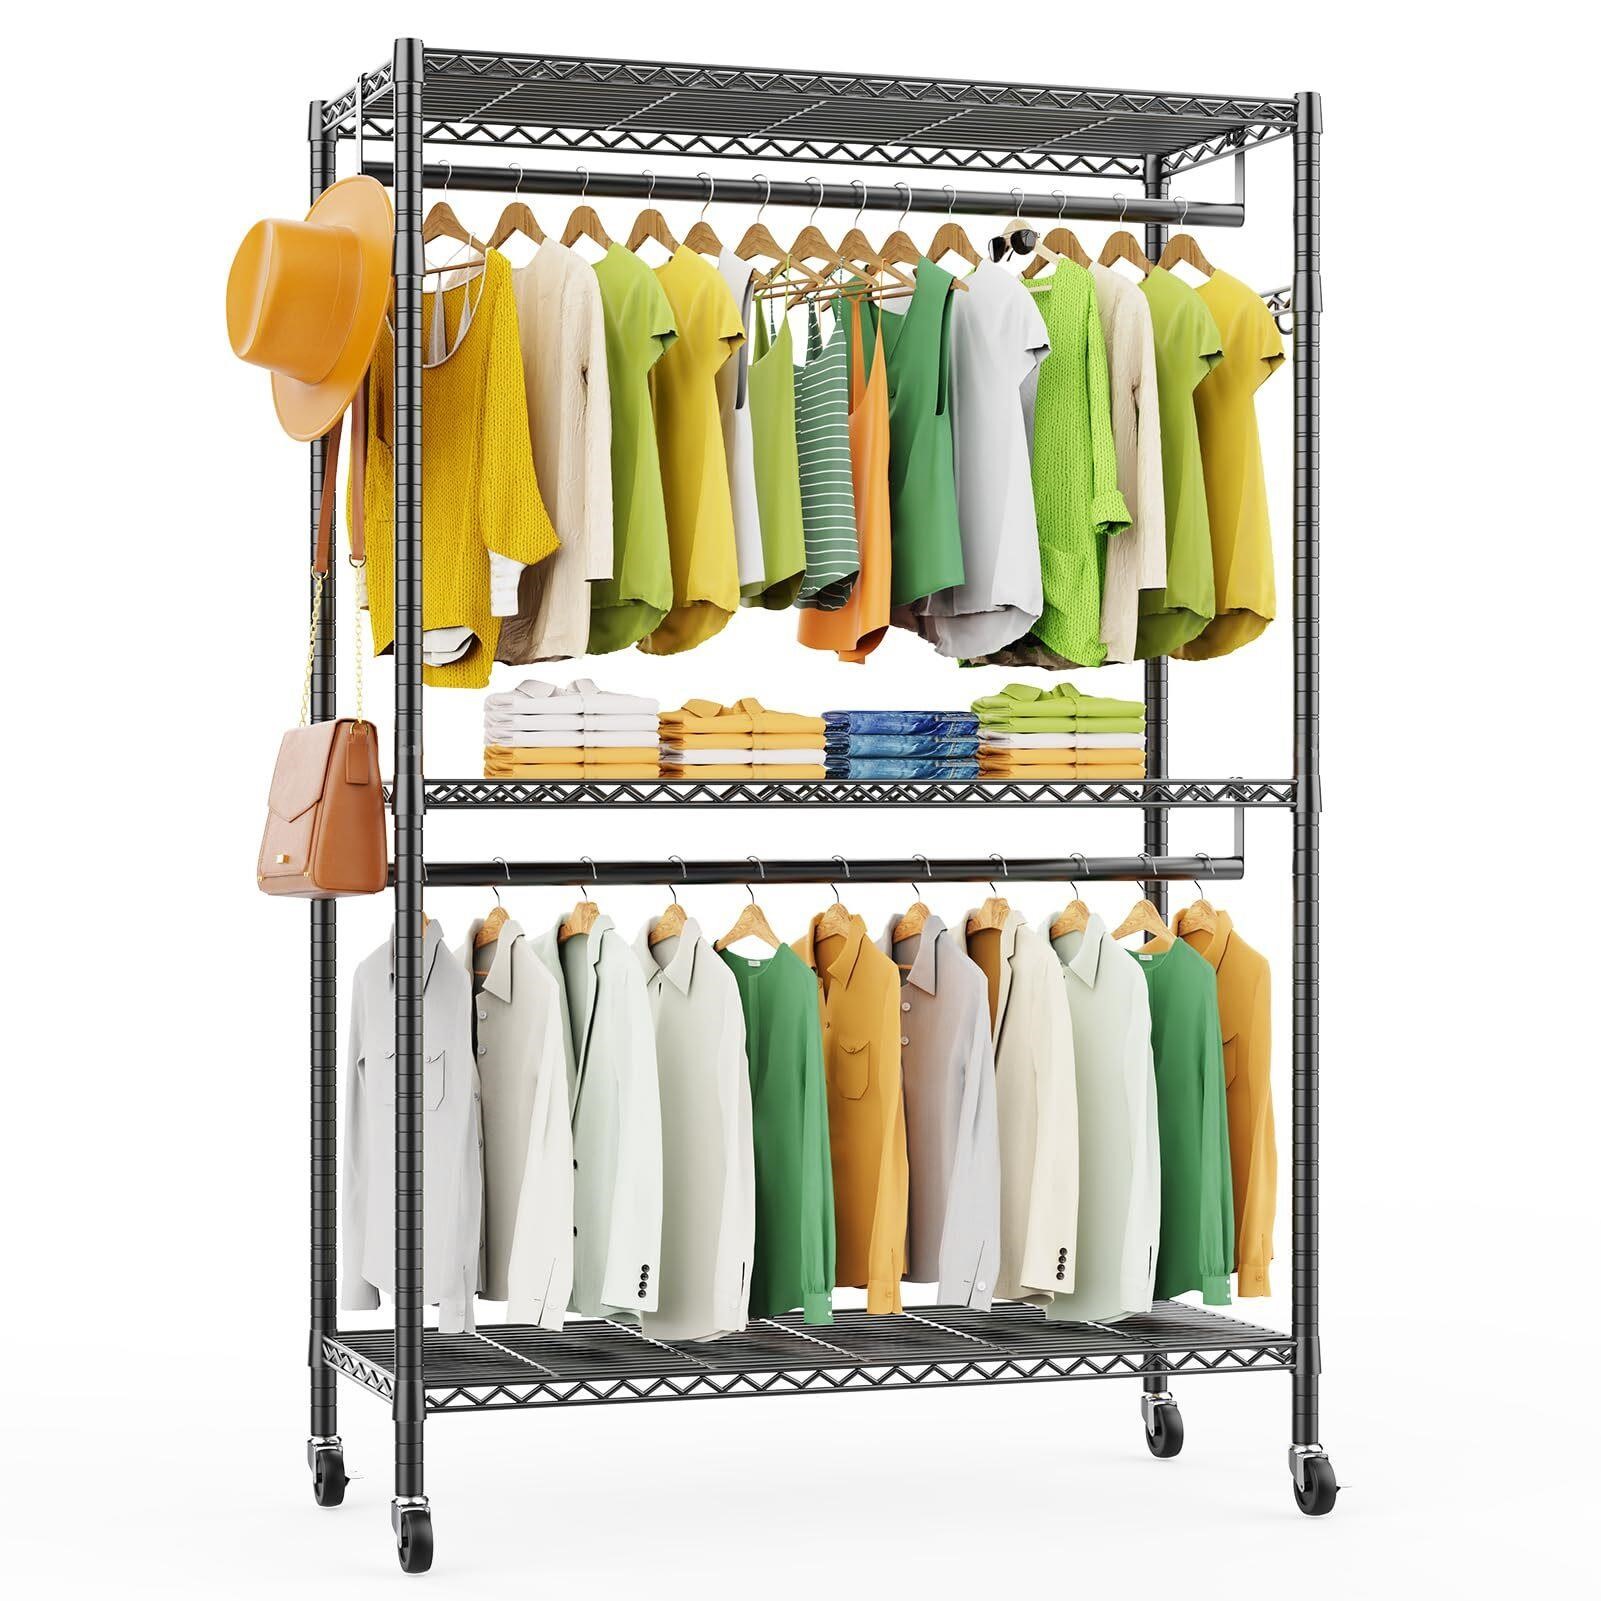 LEHOM G1L 3 Tiers Garment Rack with Storage